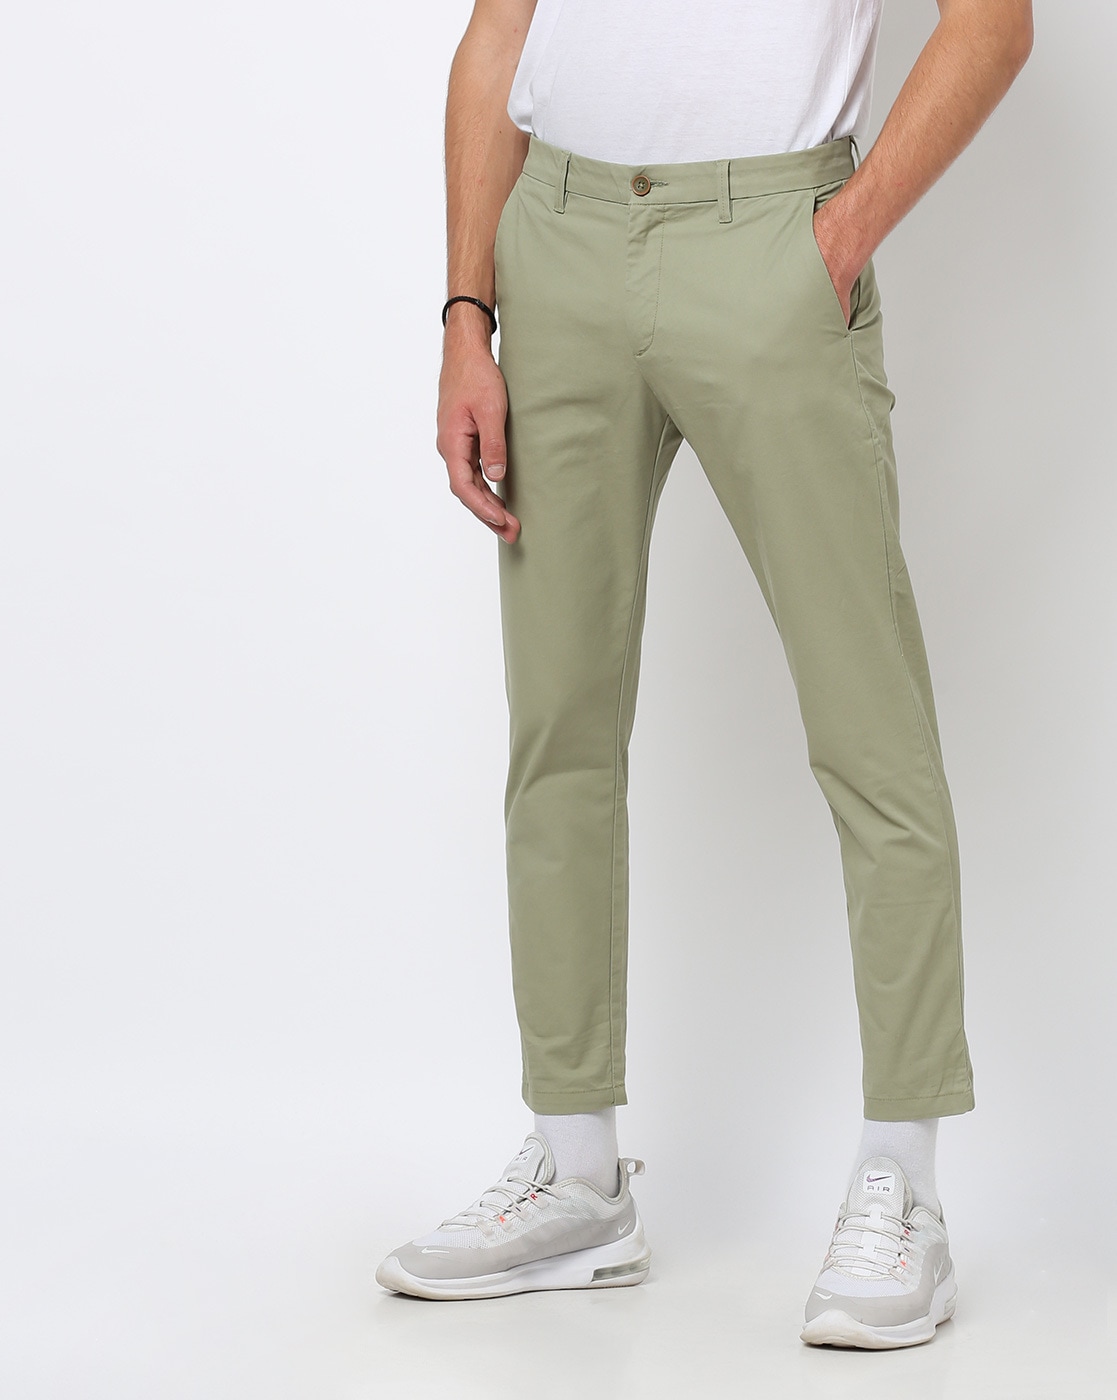 Olive green jogger pants | HOWTOWEAR Fashion | Summer fashion, Fashion,  Stylish